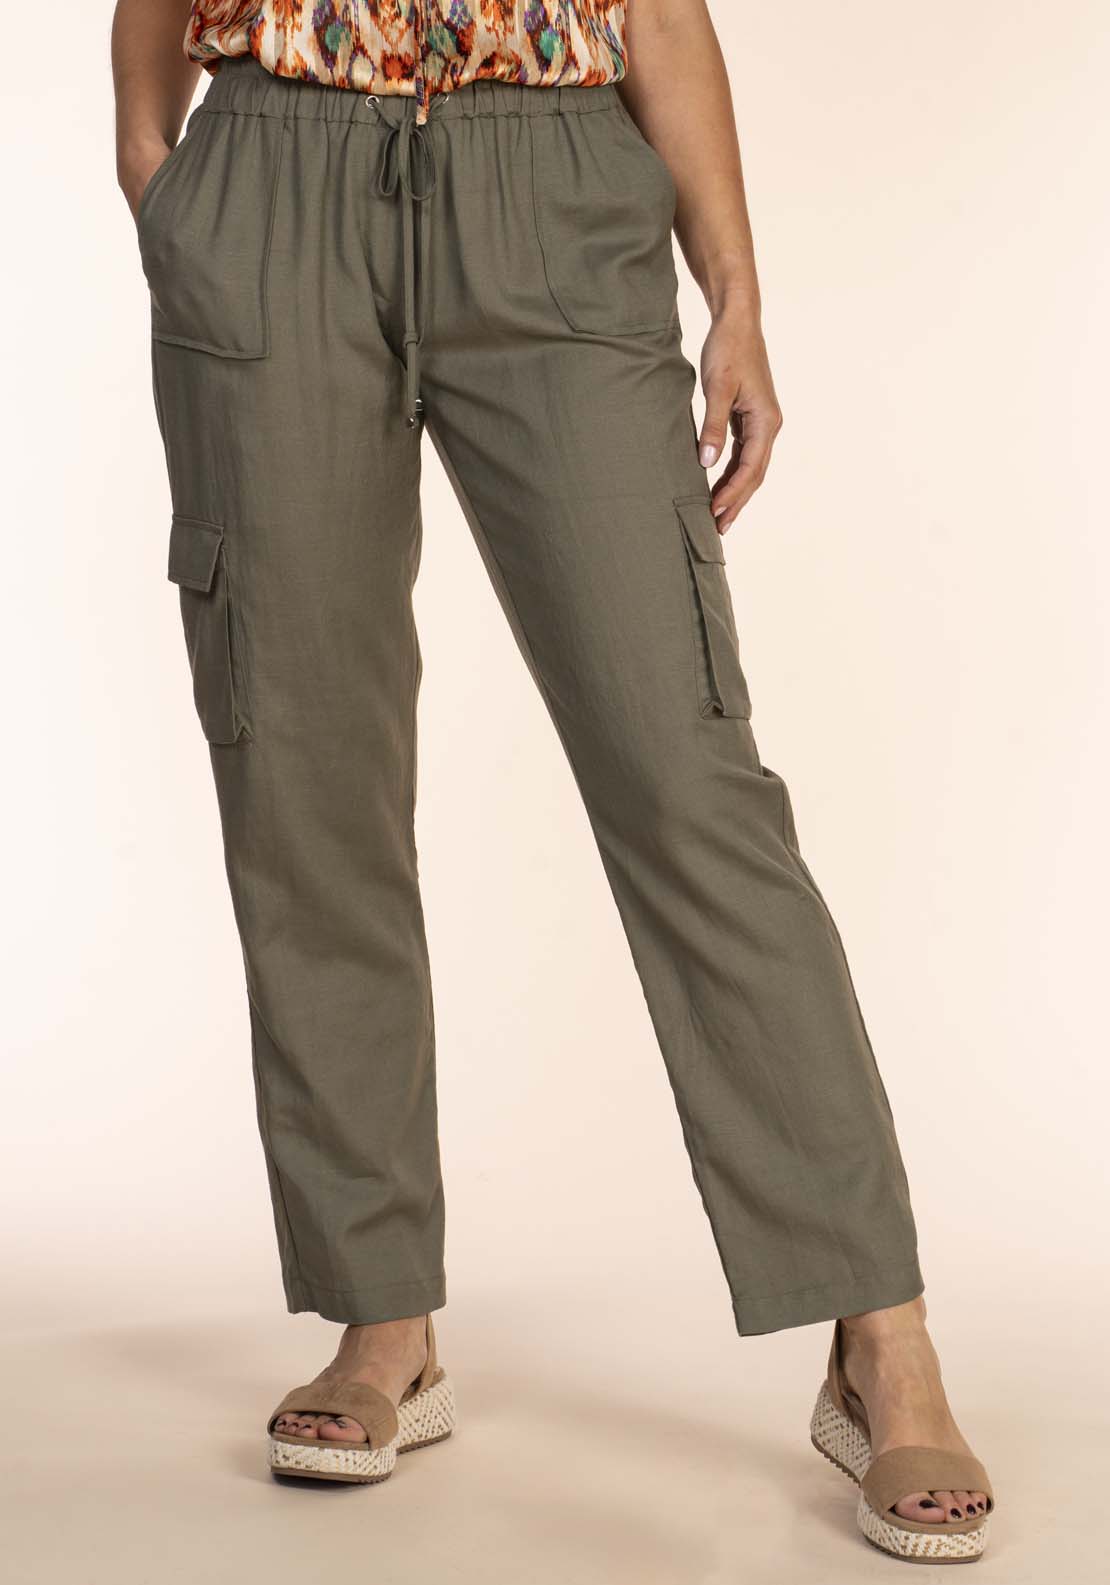 Naoise Drawstring Linen Pants - Green 6 Shaws Department Stores